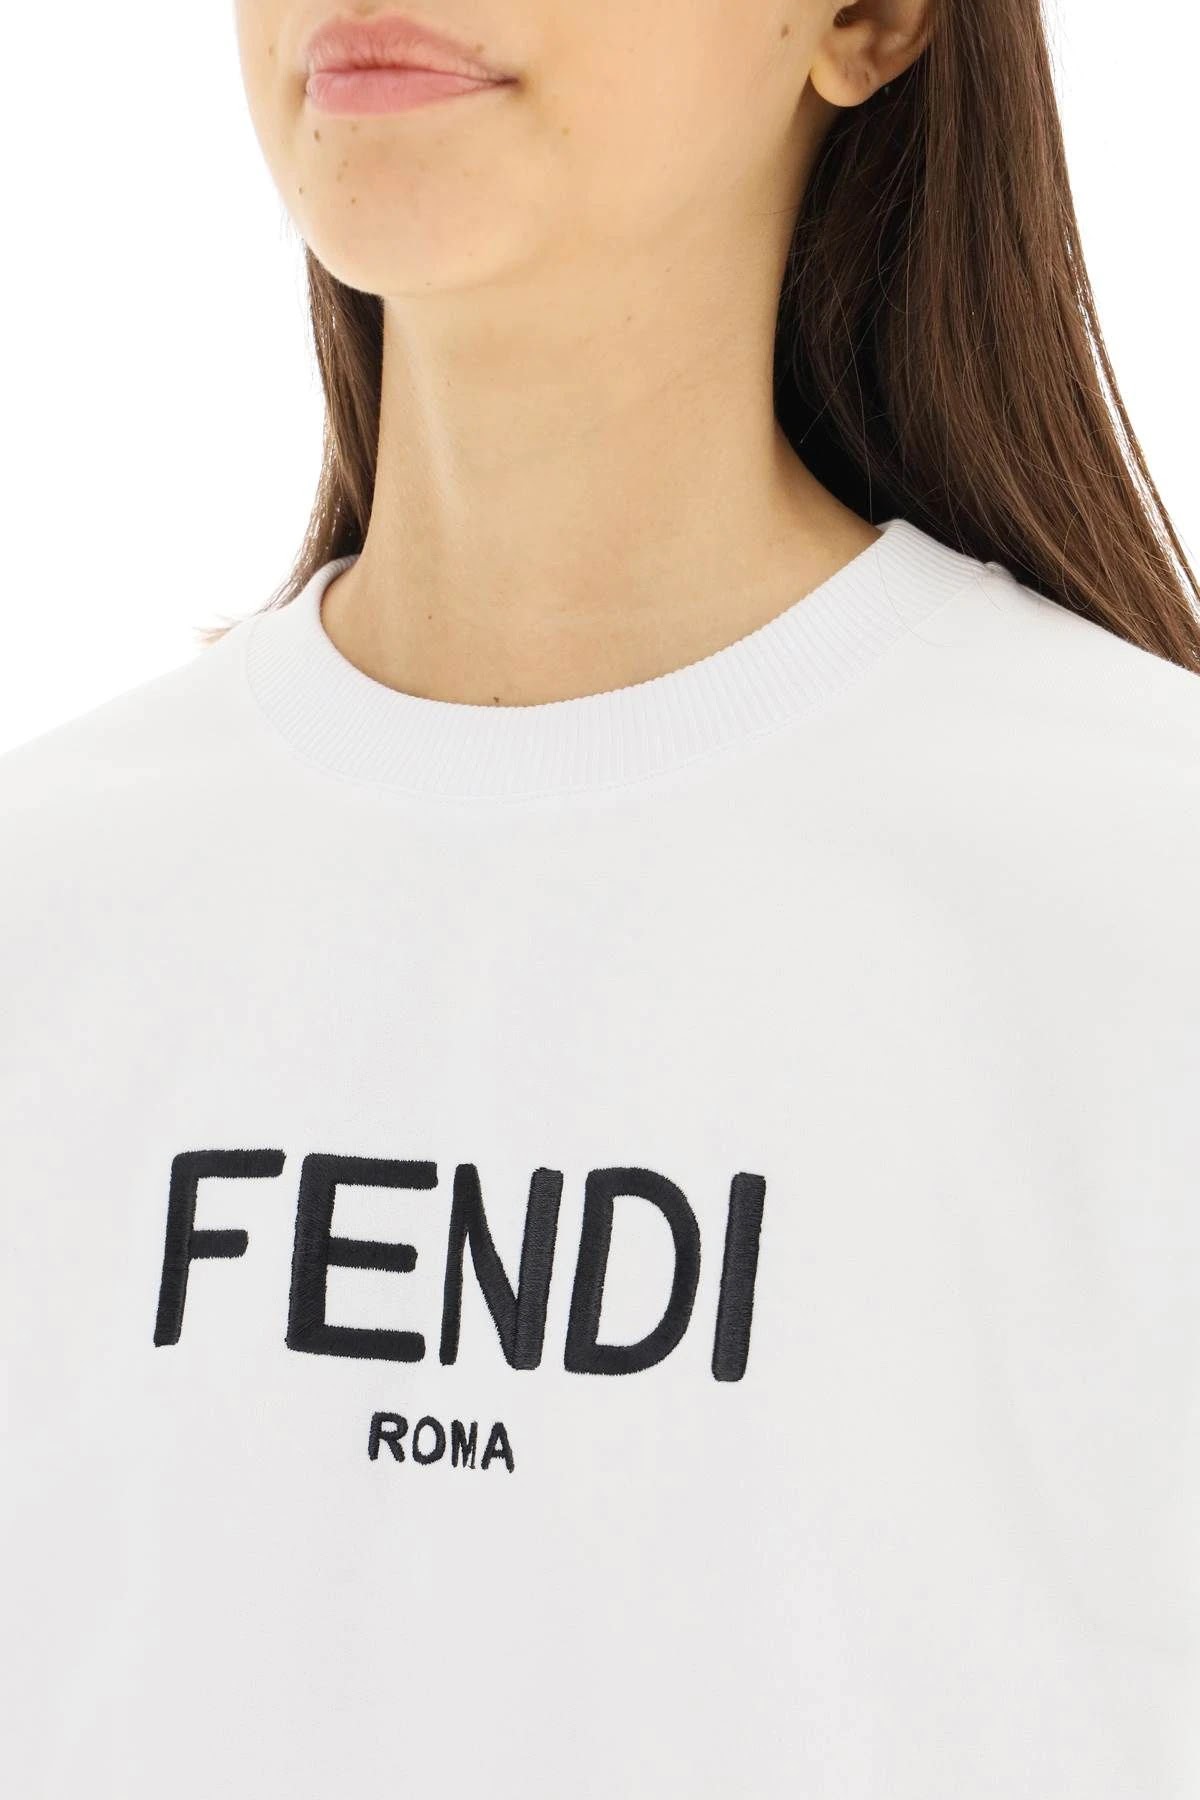 FENDI ROMA EMBROIDERED SWEATSHIRT (RMNOnline.net / RMNOnline Fashion Group)